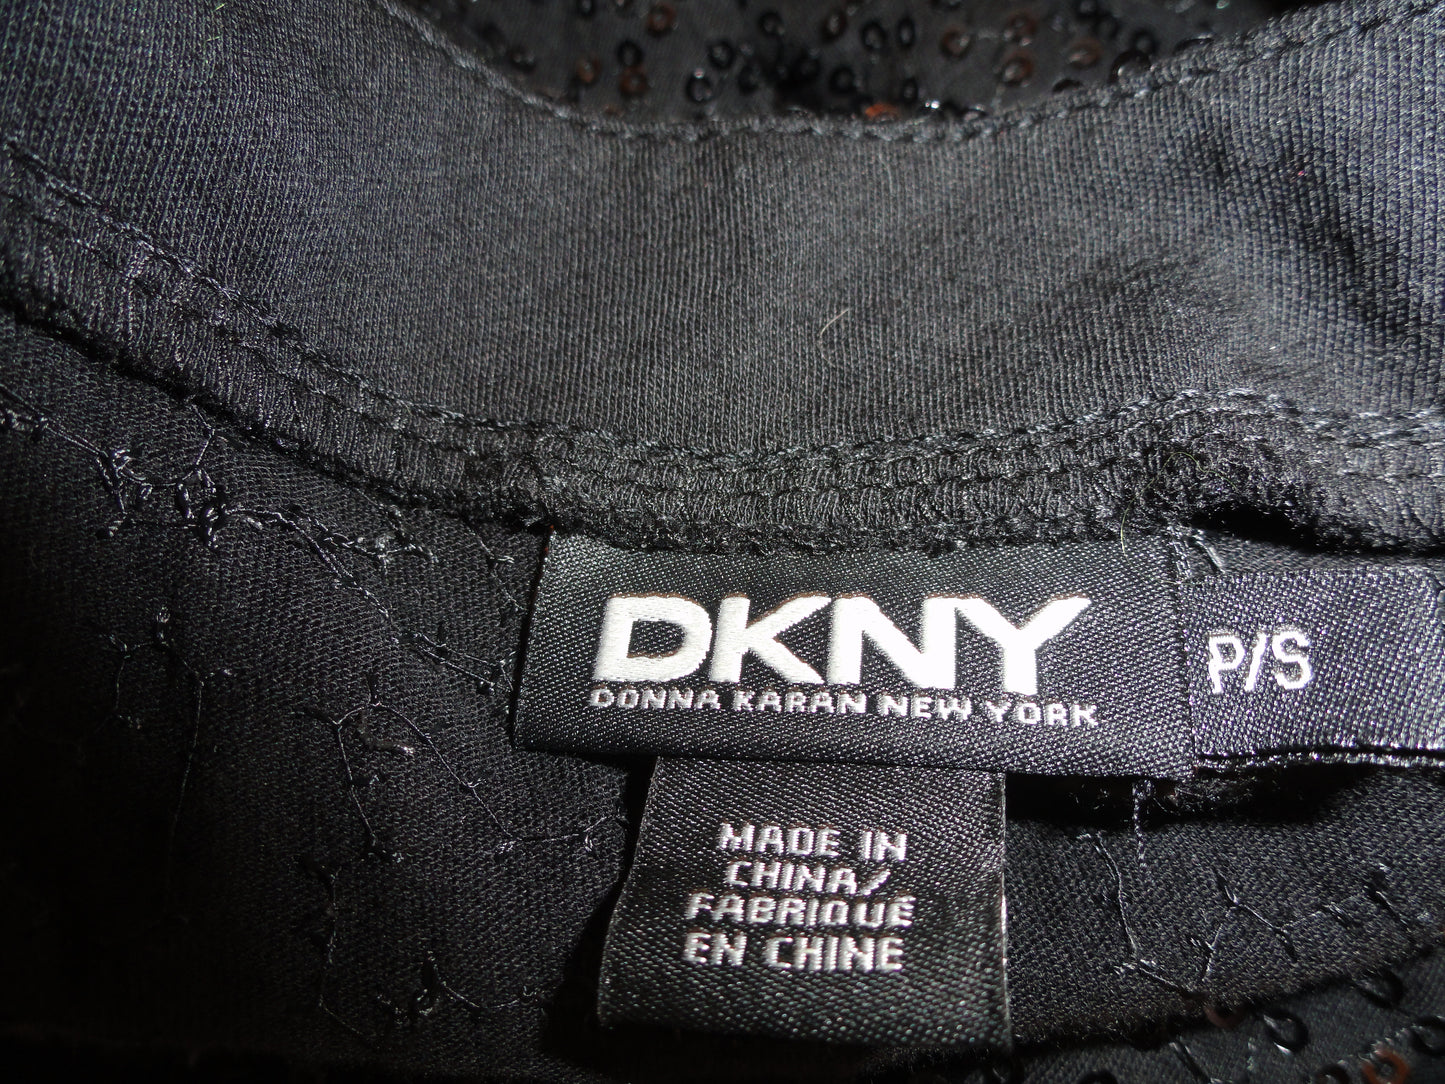 DKNY 70's Sequin Top Black P/S (SKU 000188-6)